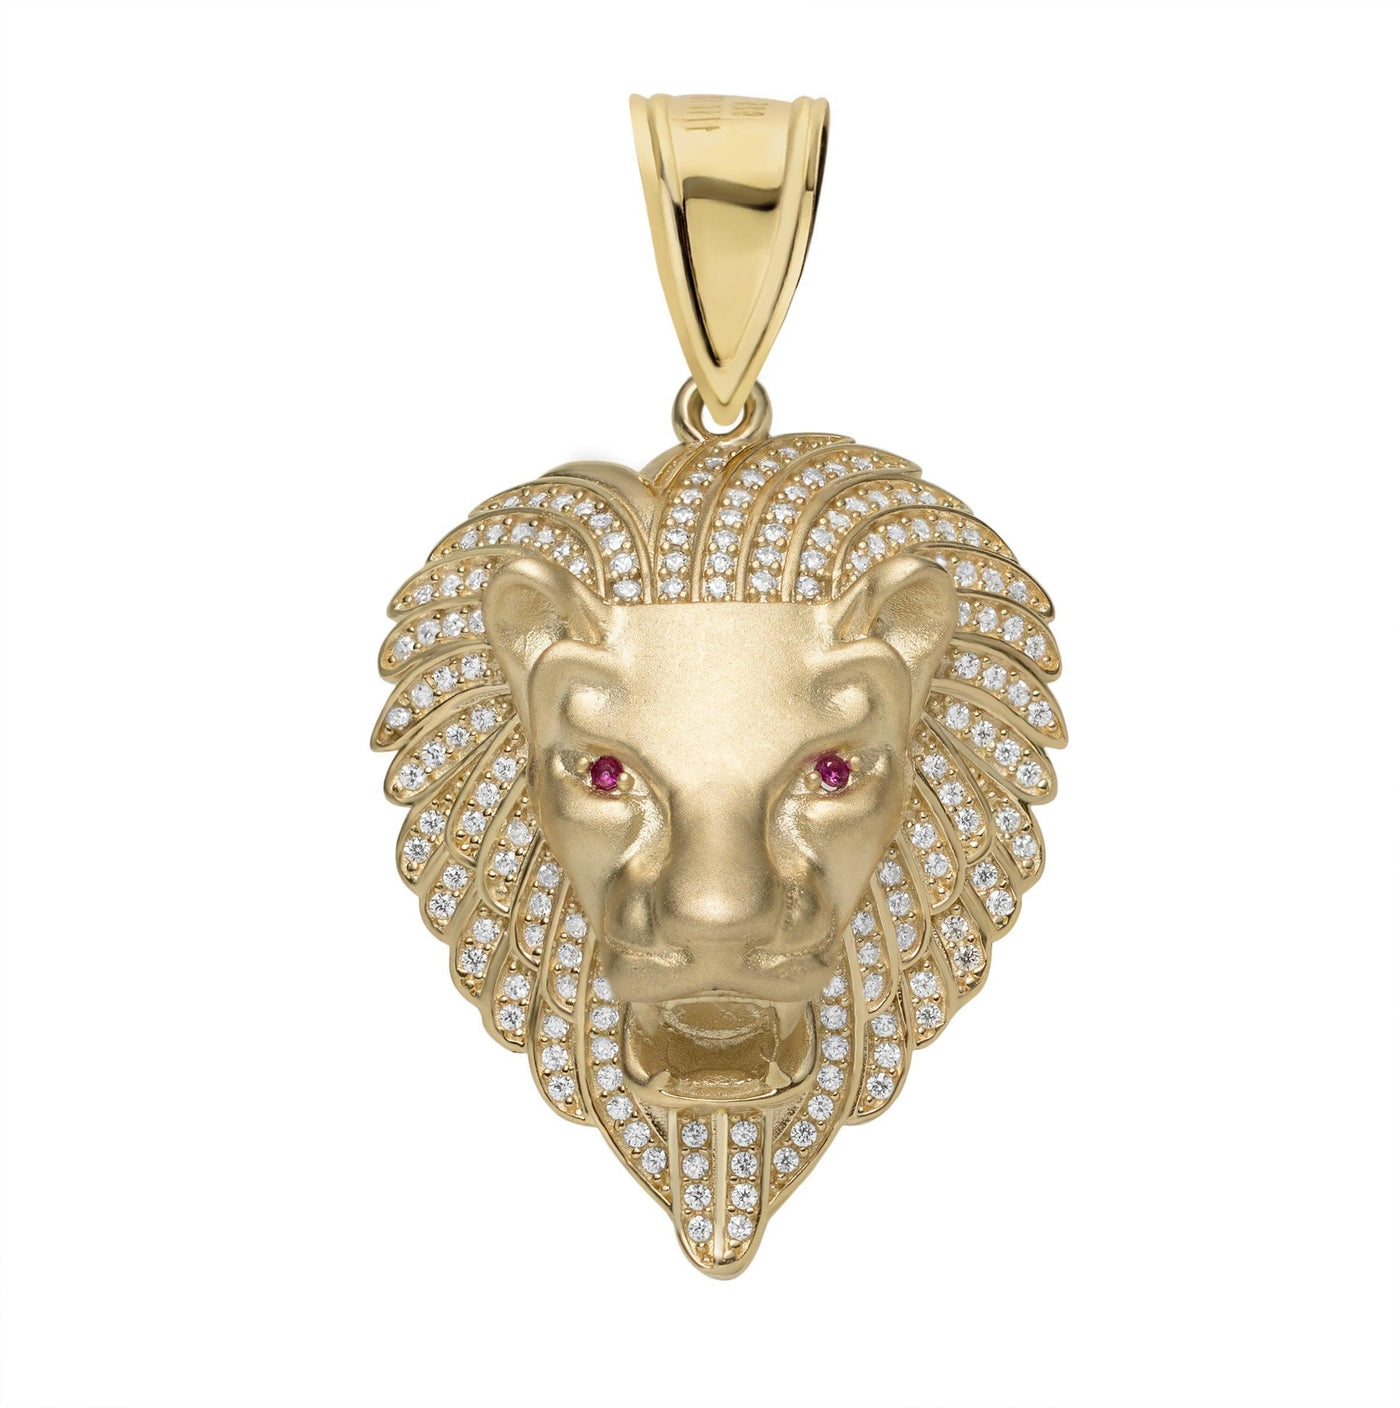 2" Men's Roaring Lion Head CZ Ruby Eyes Charm Pendant SOLID 10K Yellow Gold - bayamjewelry